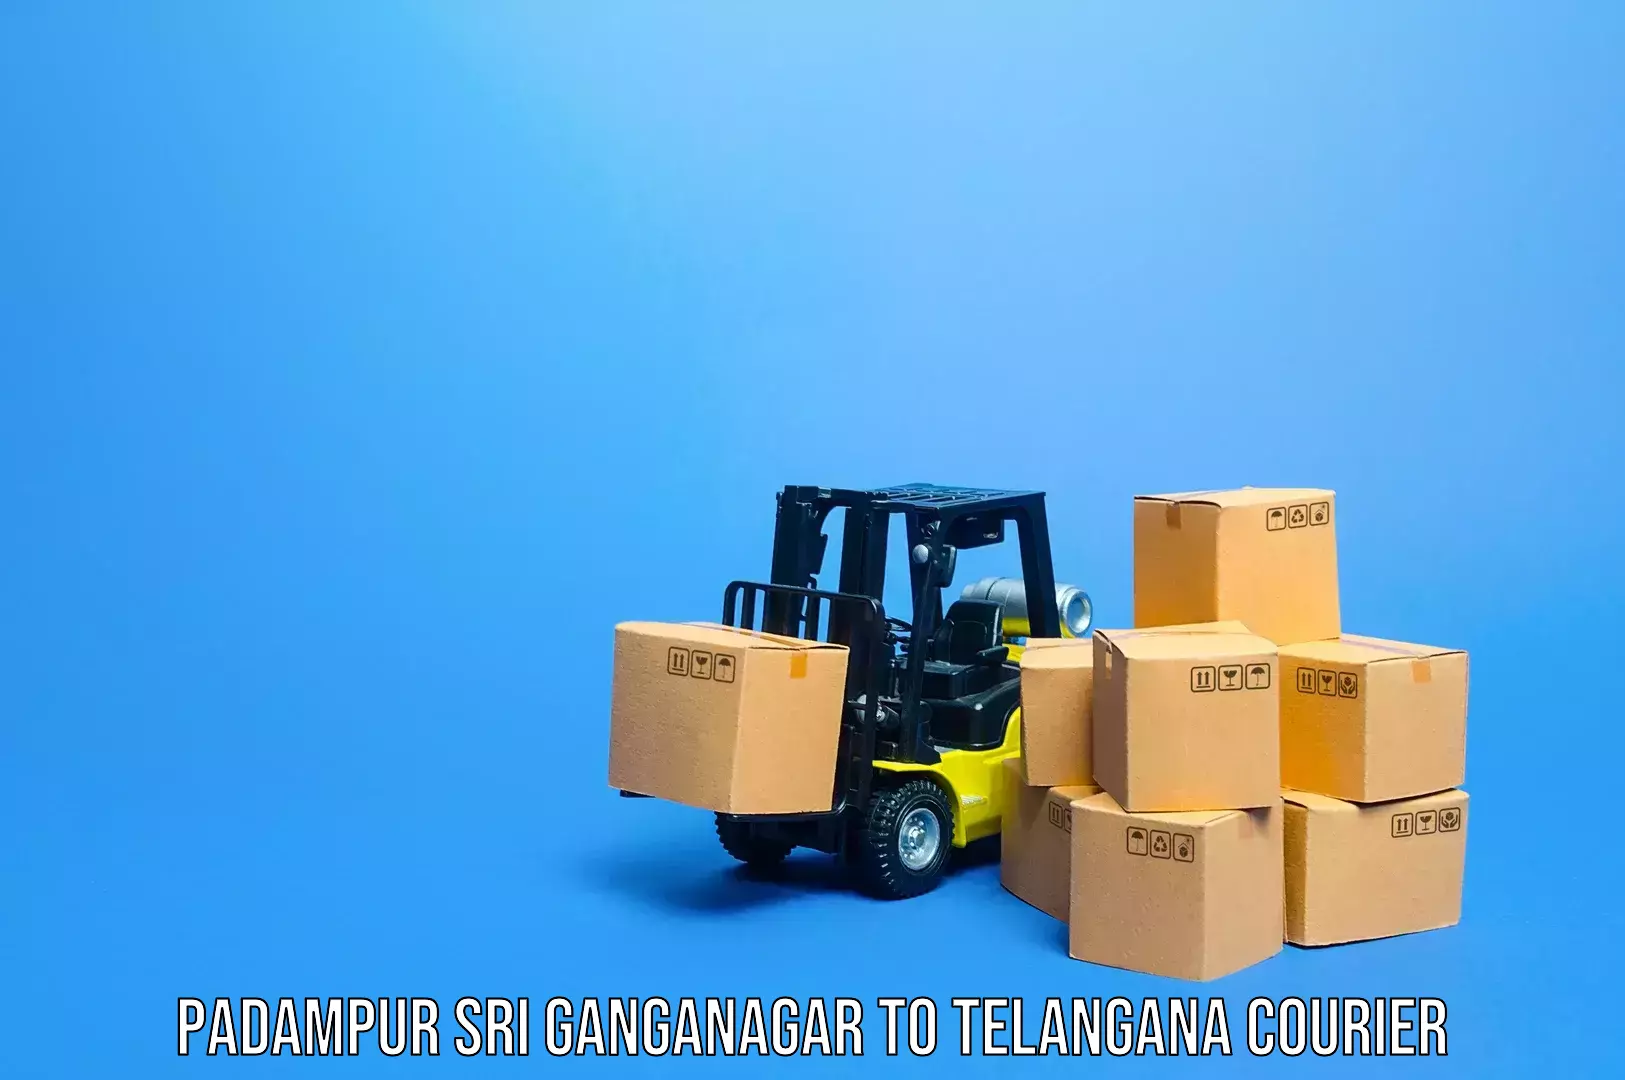 Luggage transport operations Padampur Sri Ganganagar to Telangana